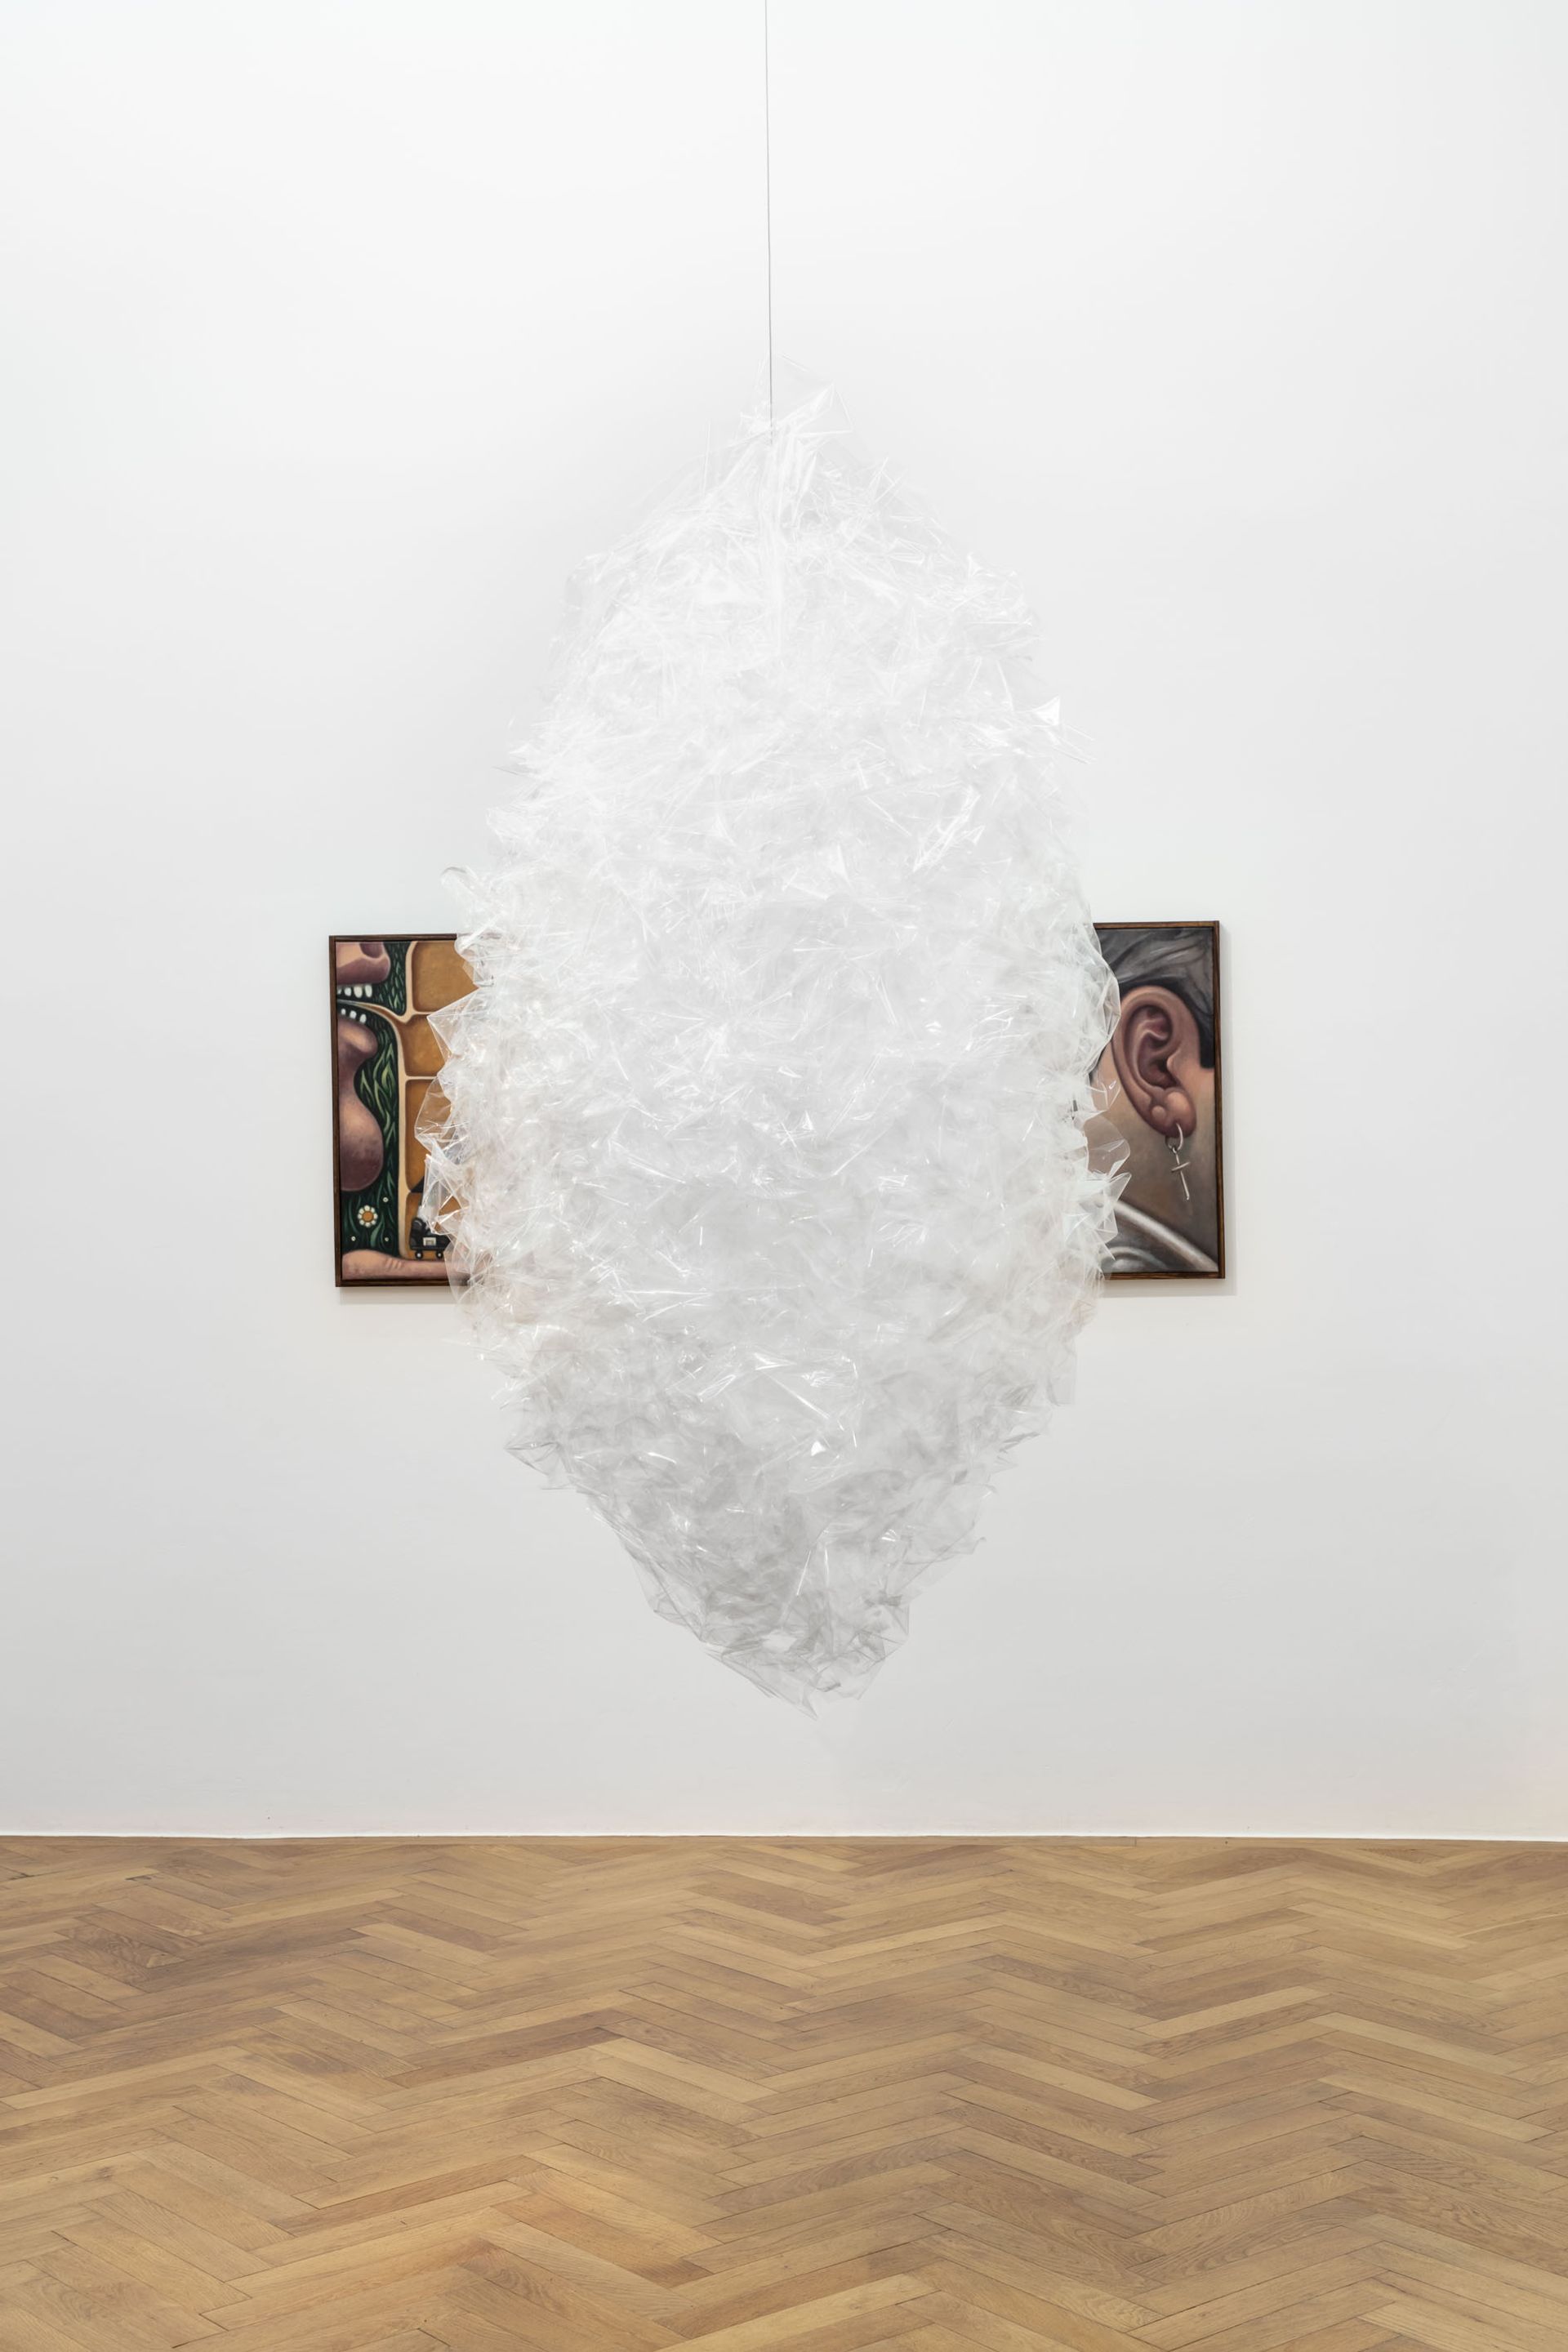 Sveta Mordovskaya, “Cocoon”, 2021, gift foils, dimensions variable, Courtesy the artist and Weiss Falk, Basel, photo: Sebastian Kissel